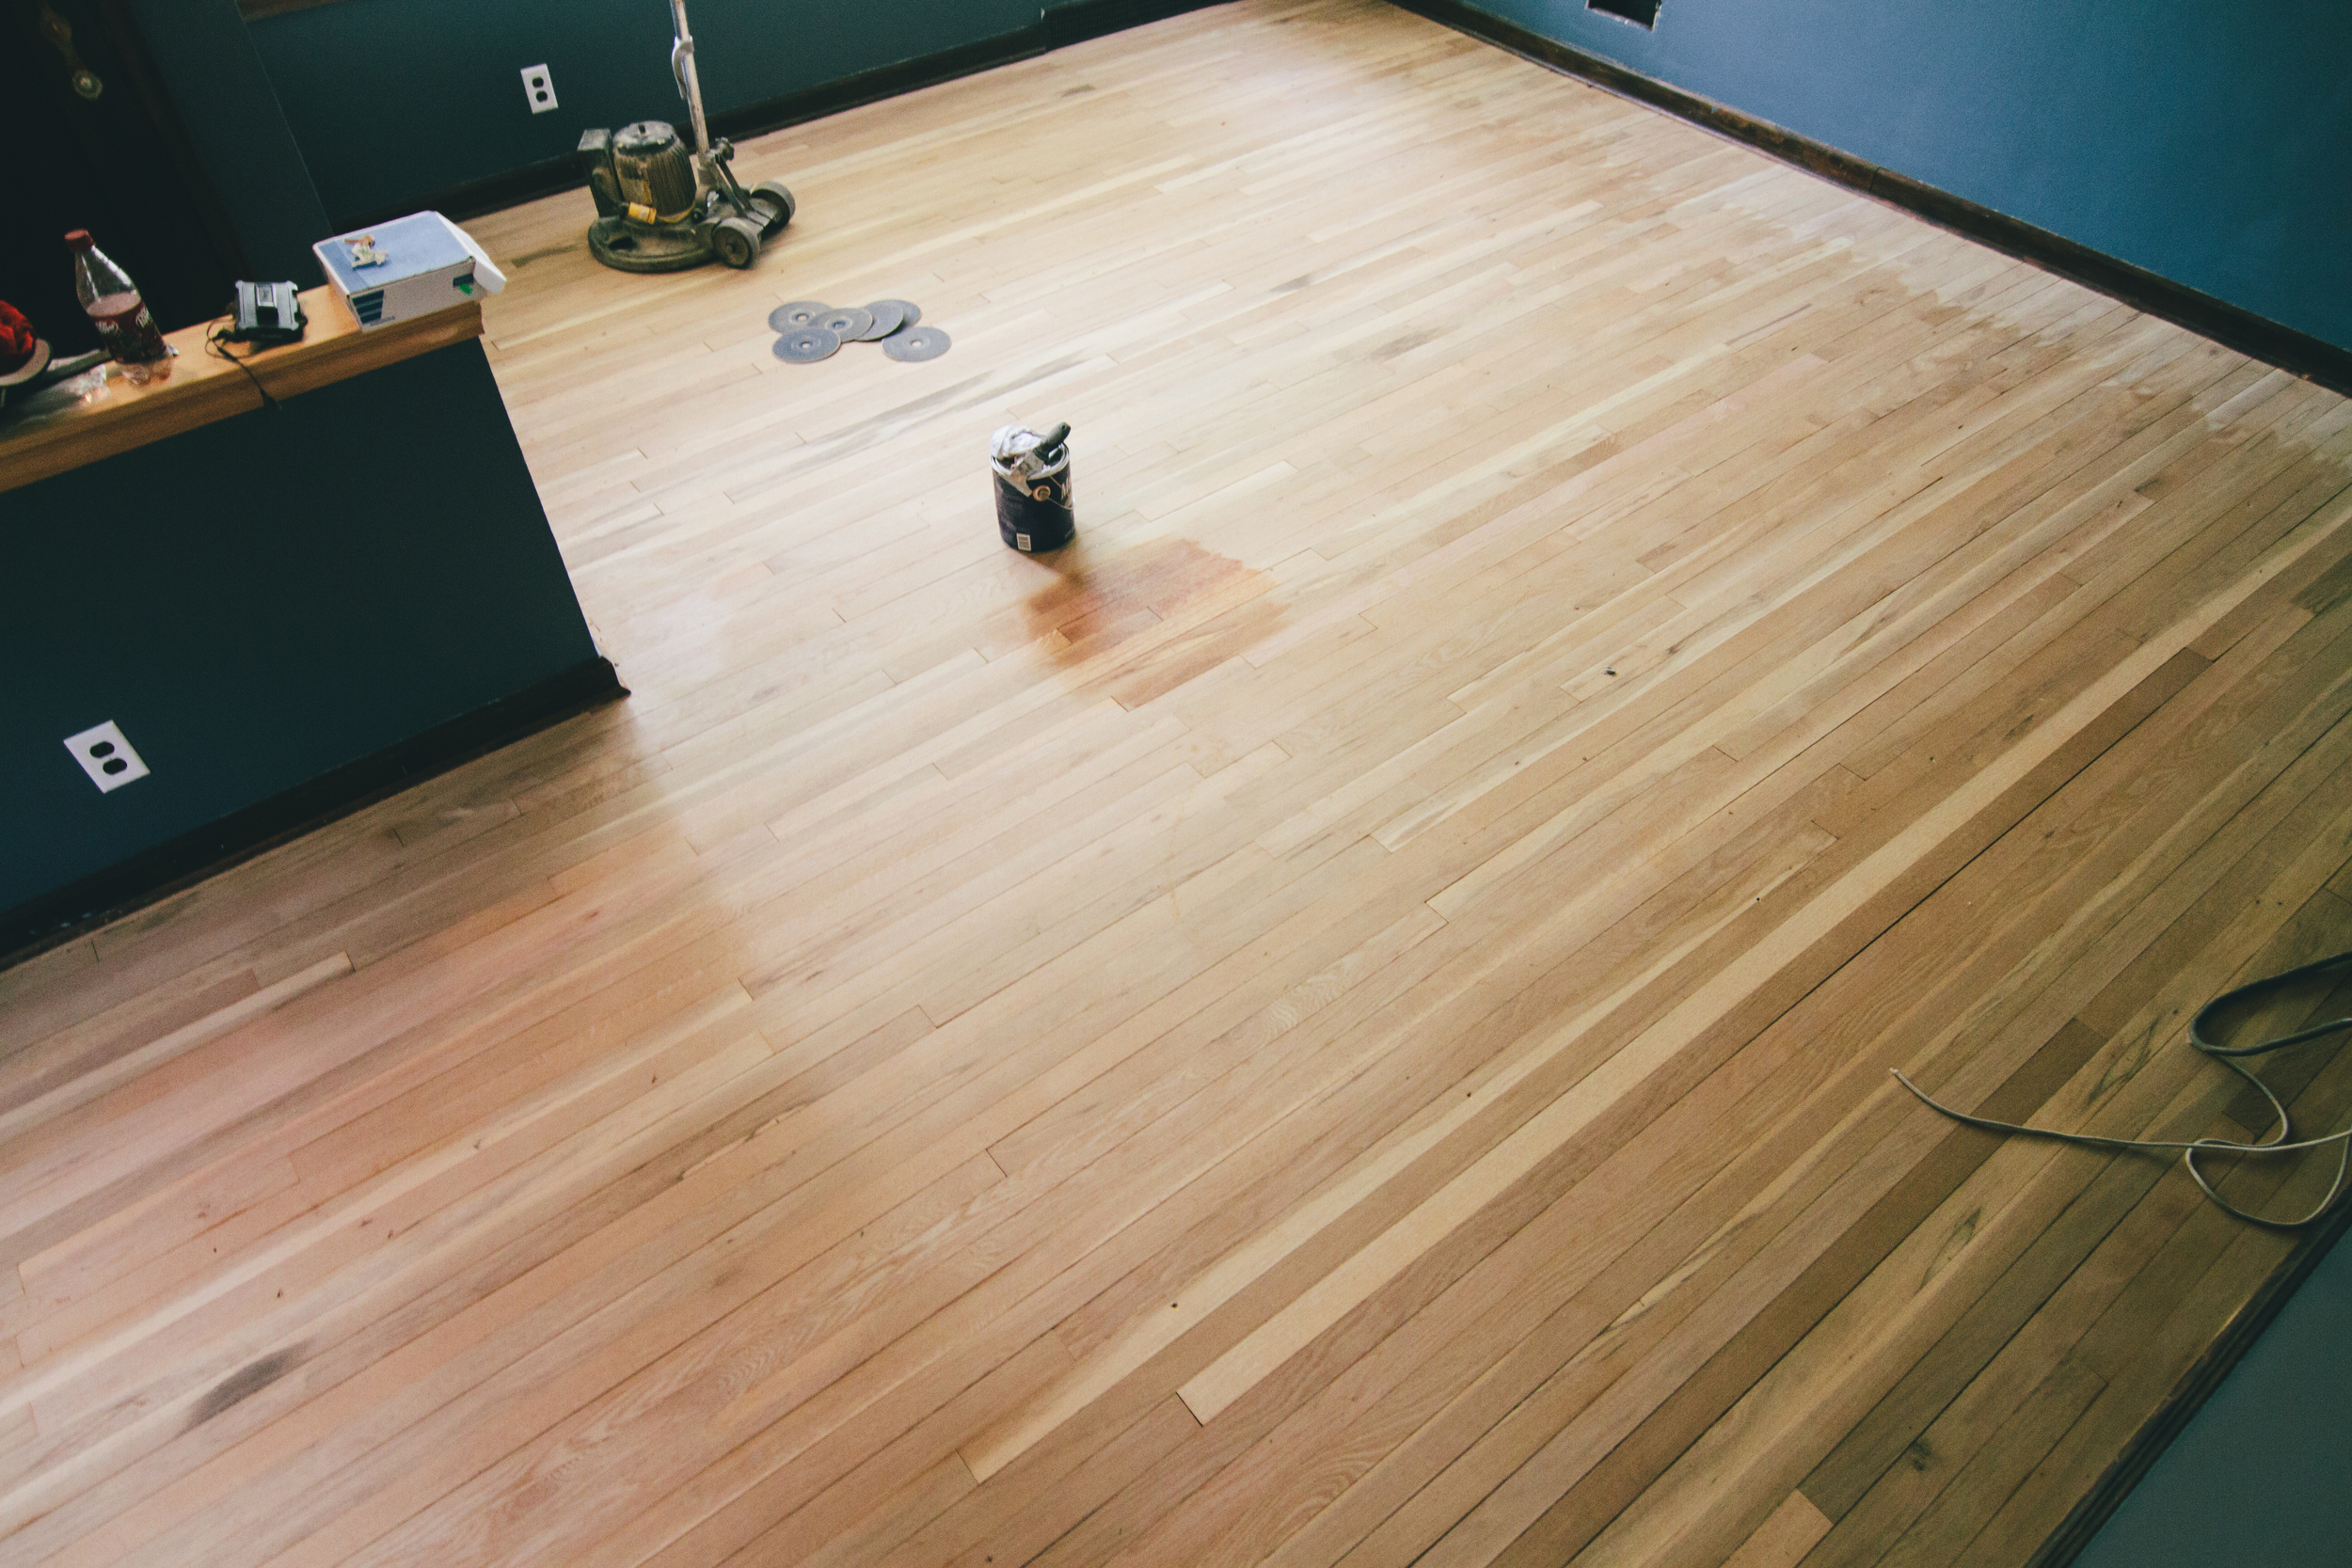  Floors all sanded. 